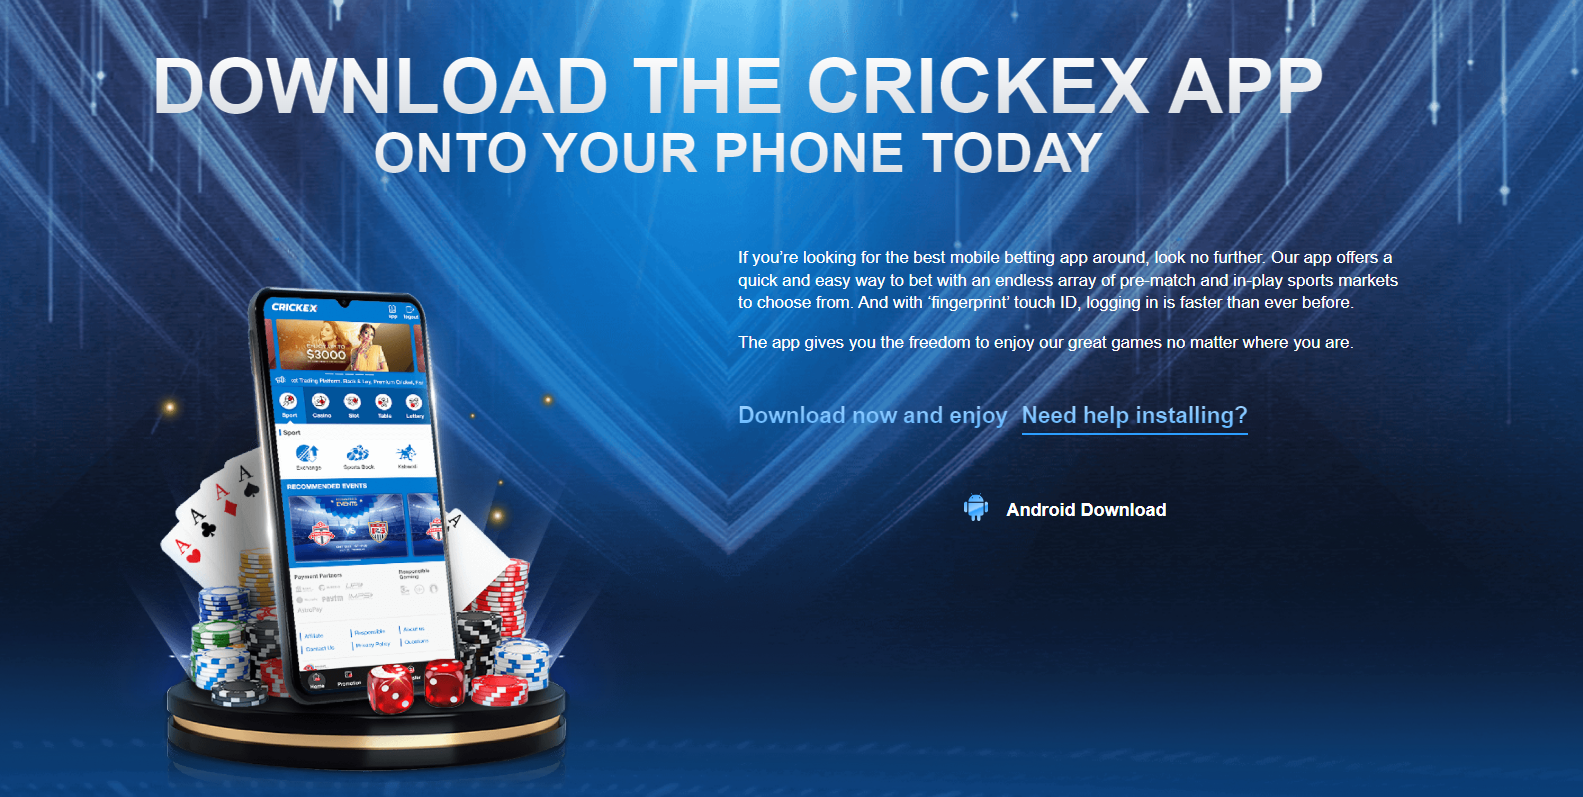 crickex app download